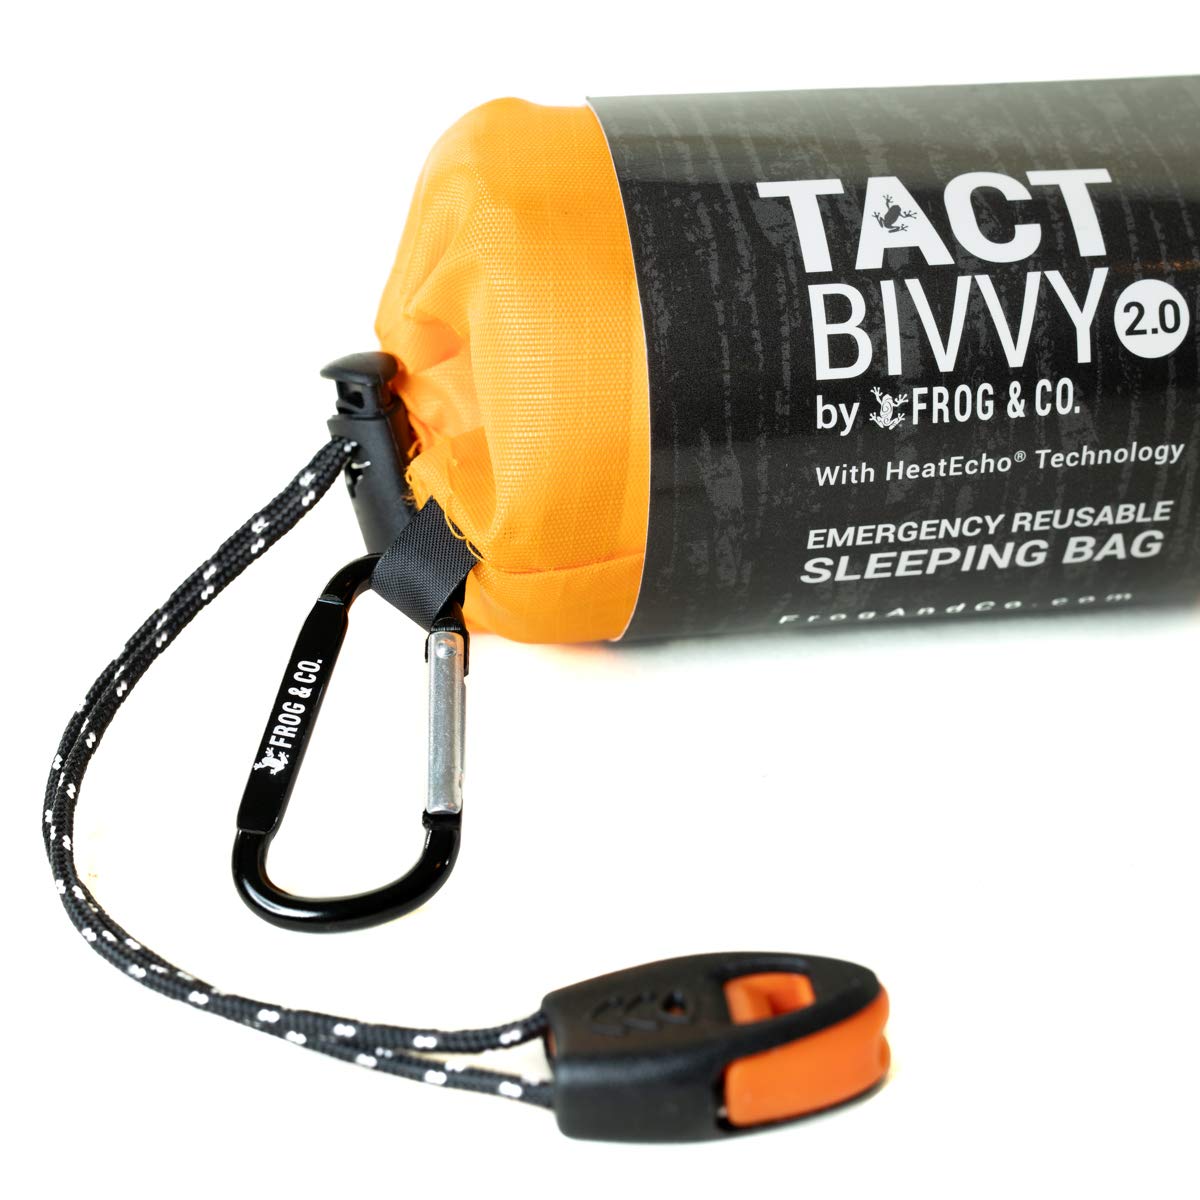 Survival Frog Tact Bivvy 2.0 Emergency Sleeping Bag $17